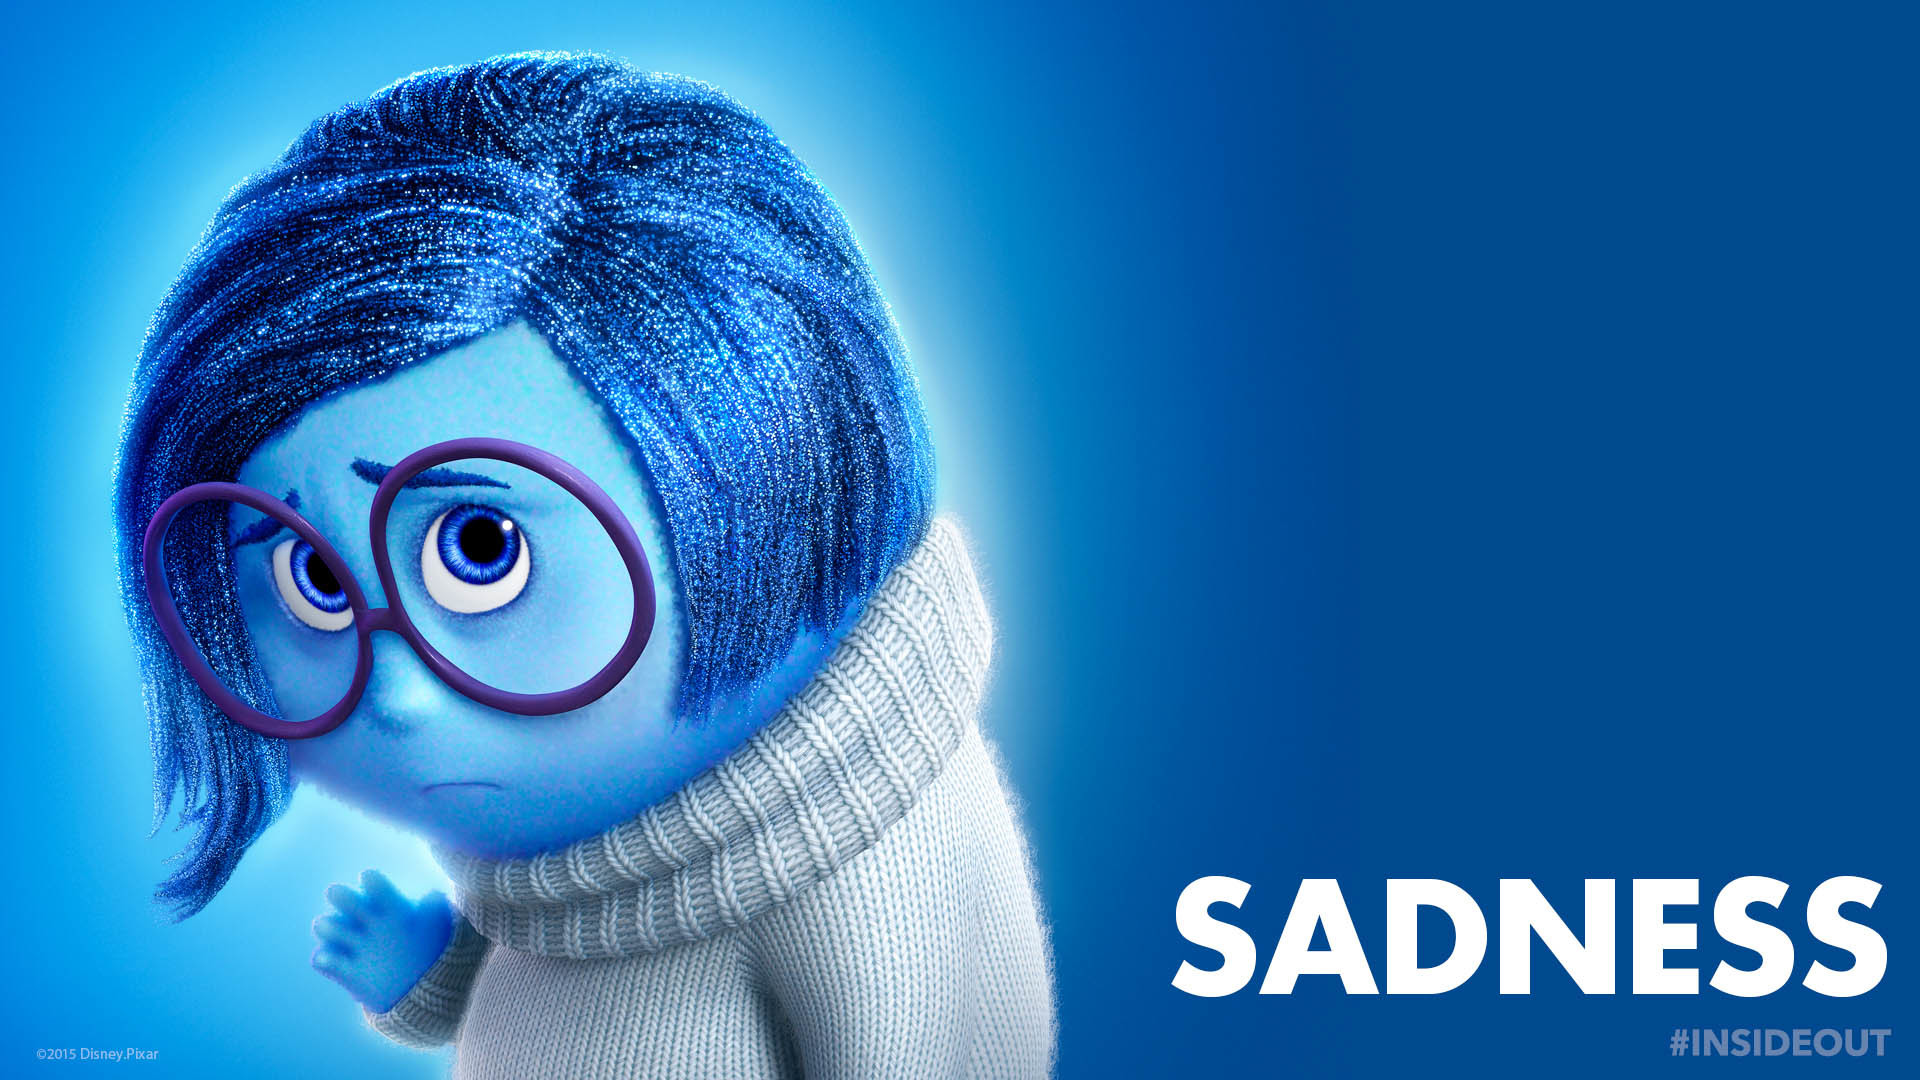 1920x1080 Inside Out character: Sadness - Disney Pixar  wallpaper